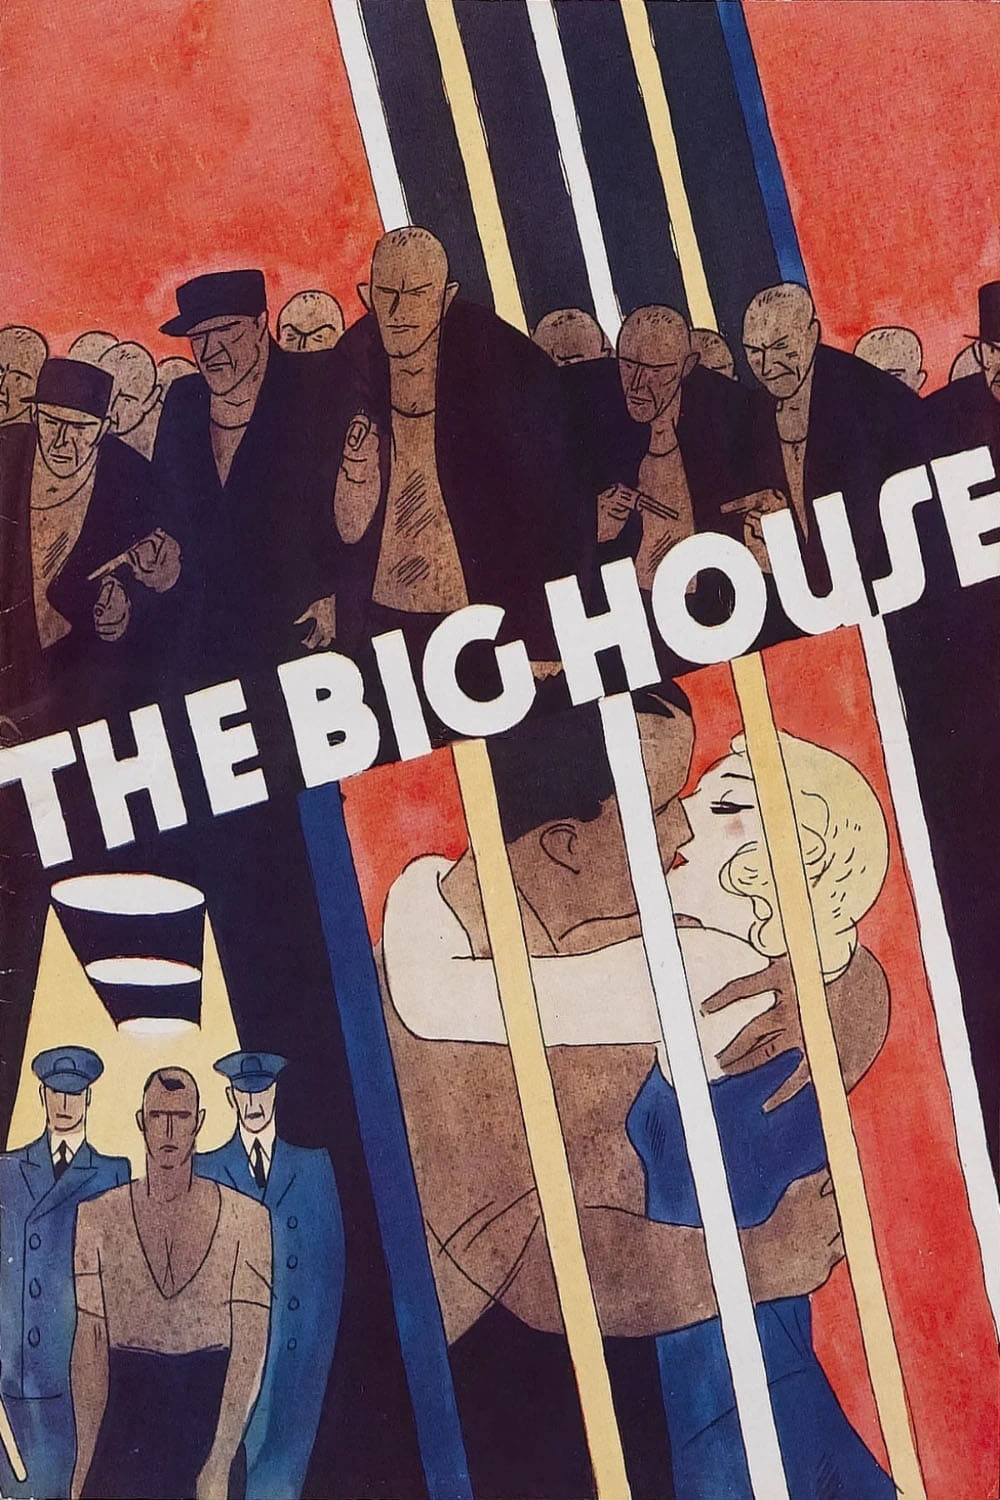 The Big House (1930)